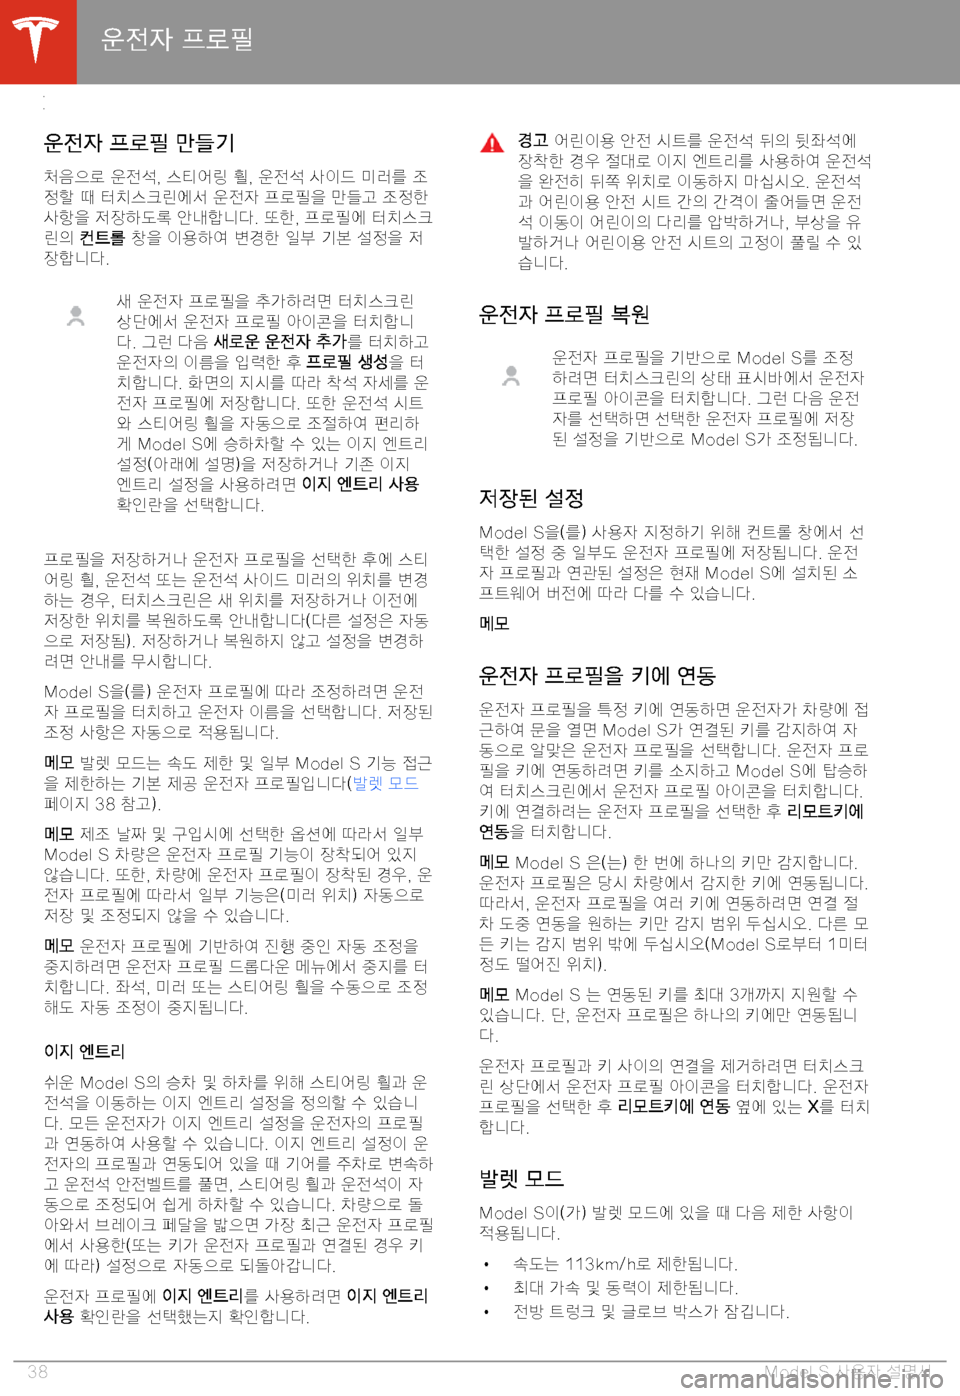 TESLA MODEL S 2020  사용자 가이드 (in Korean) >